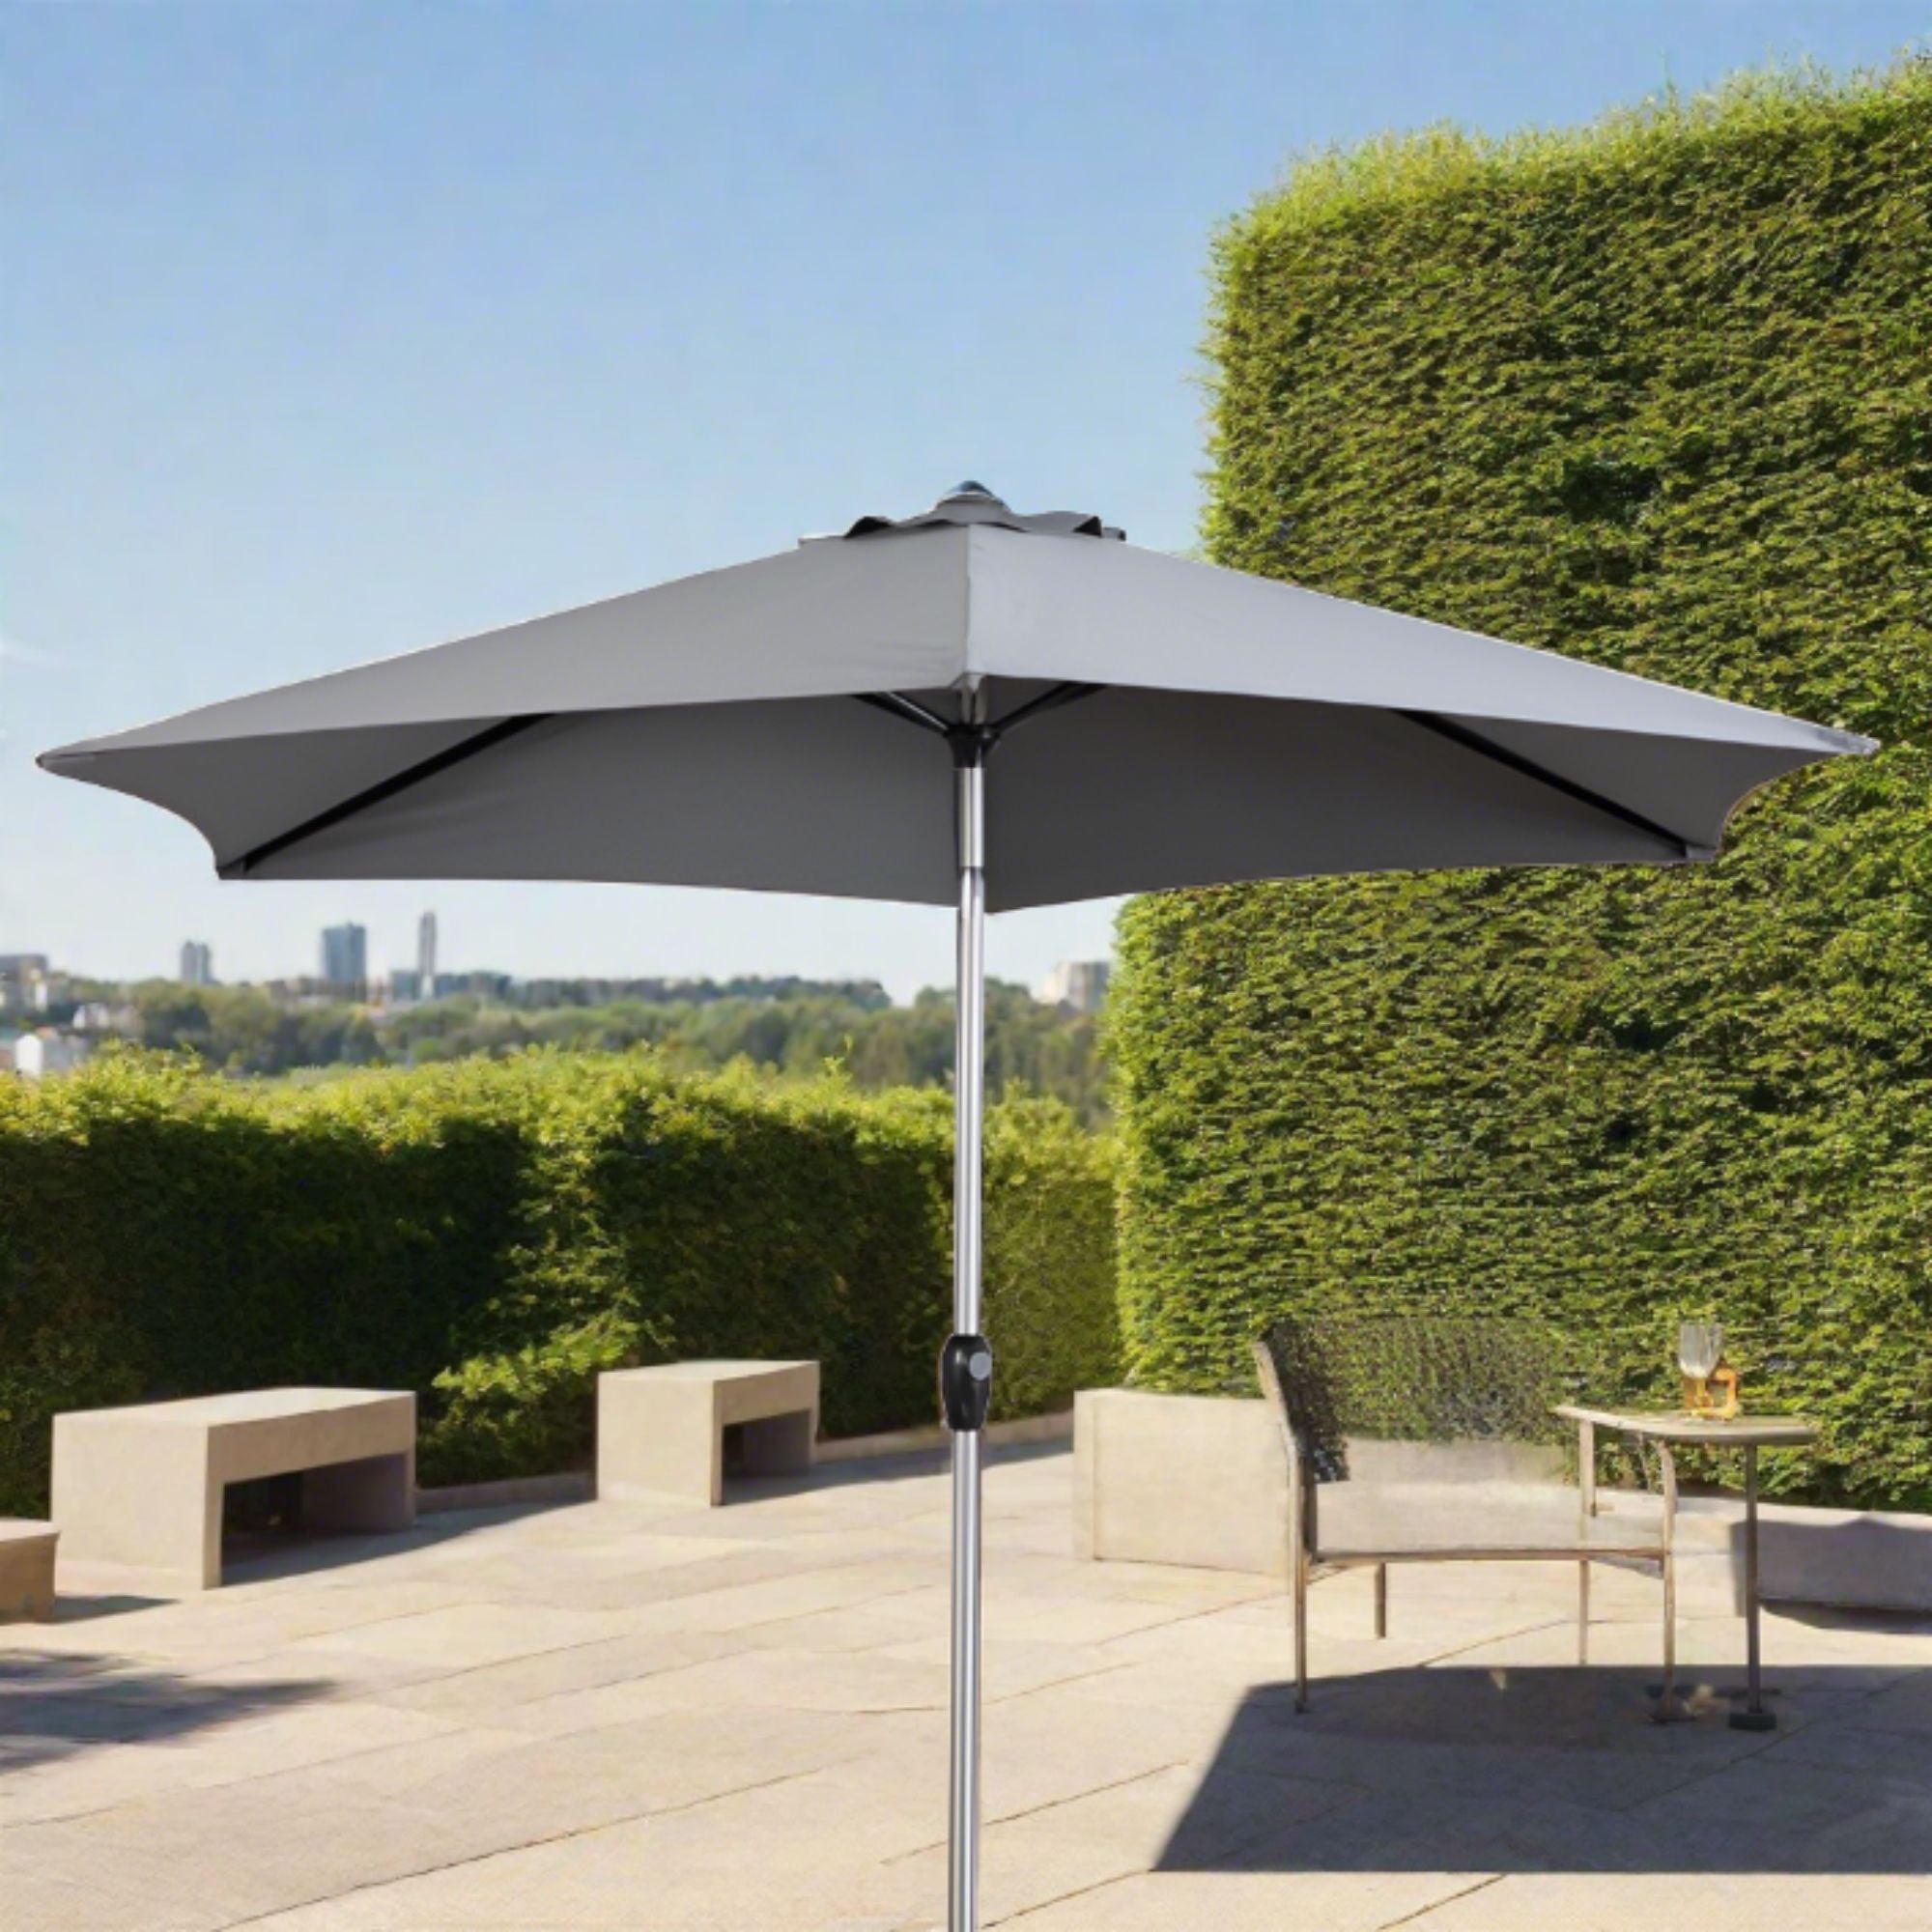 Vibo 2.7m adjustable grey parasol | malletandplane.com